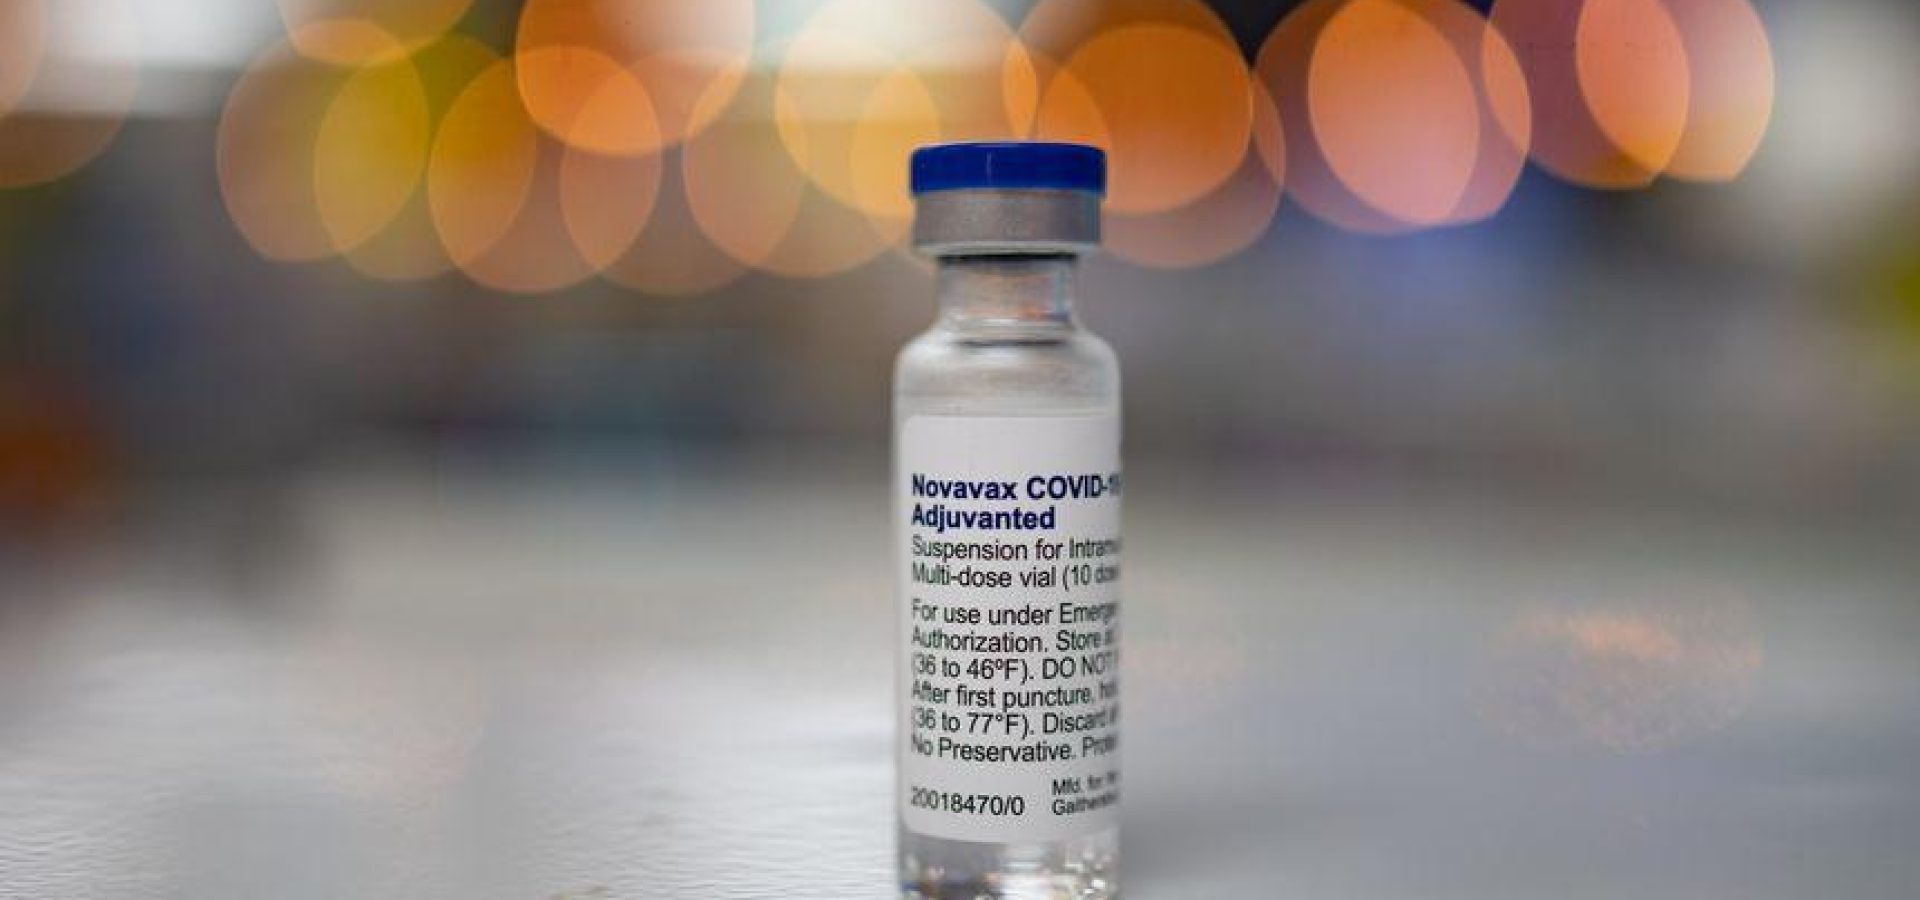 Government's last vaccine batch provided by Novavax